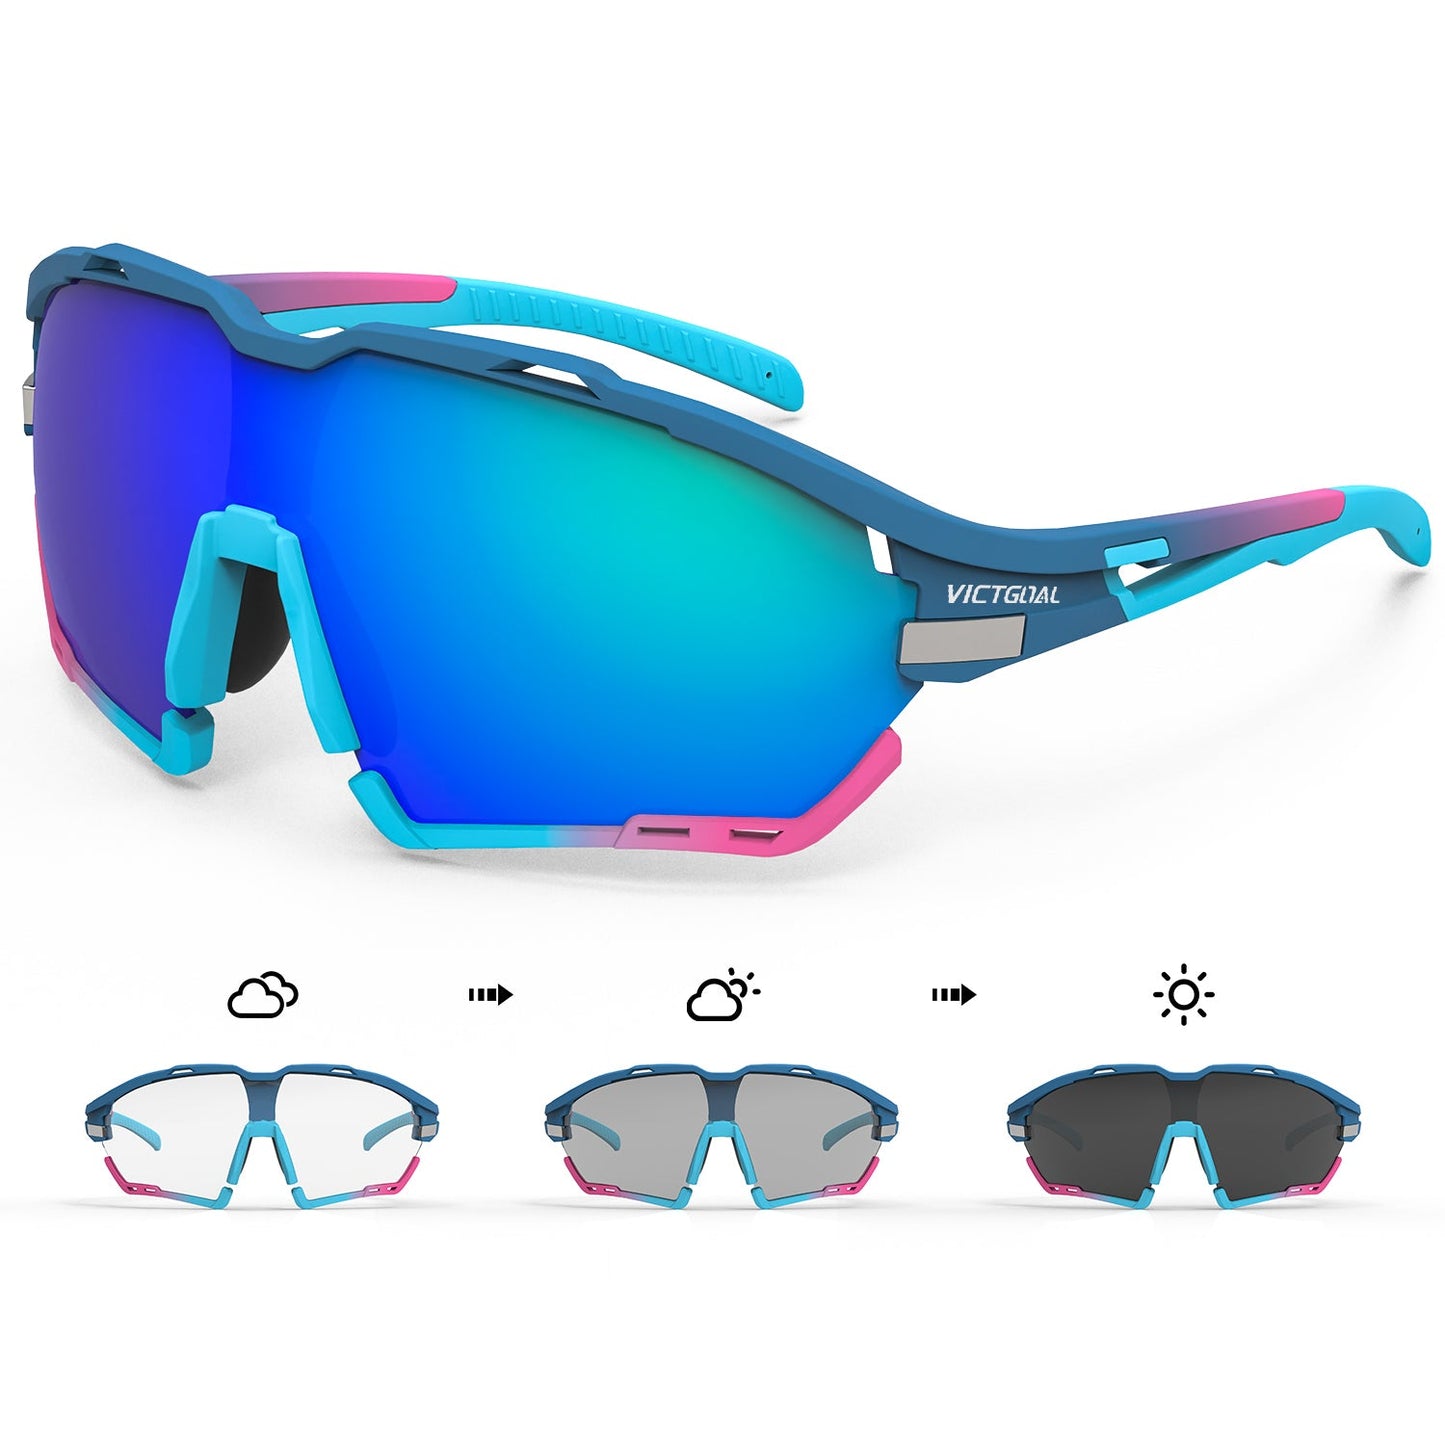 Cycling Glasses Sports Sunglasses Women Men Running,Style 3，G36361